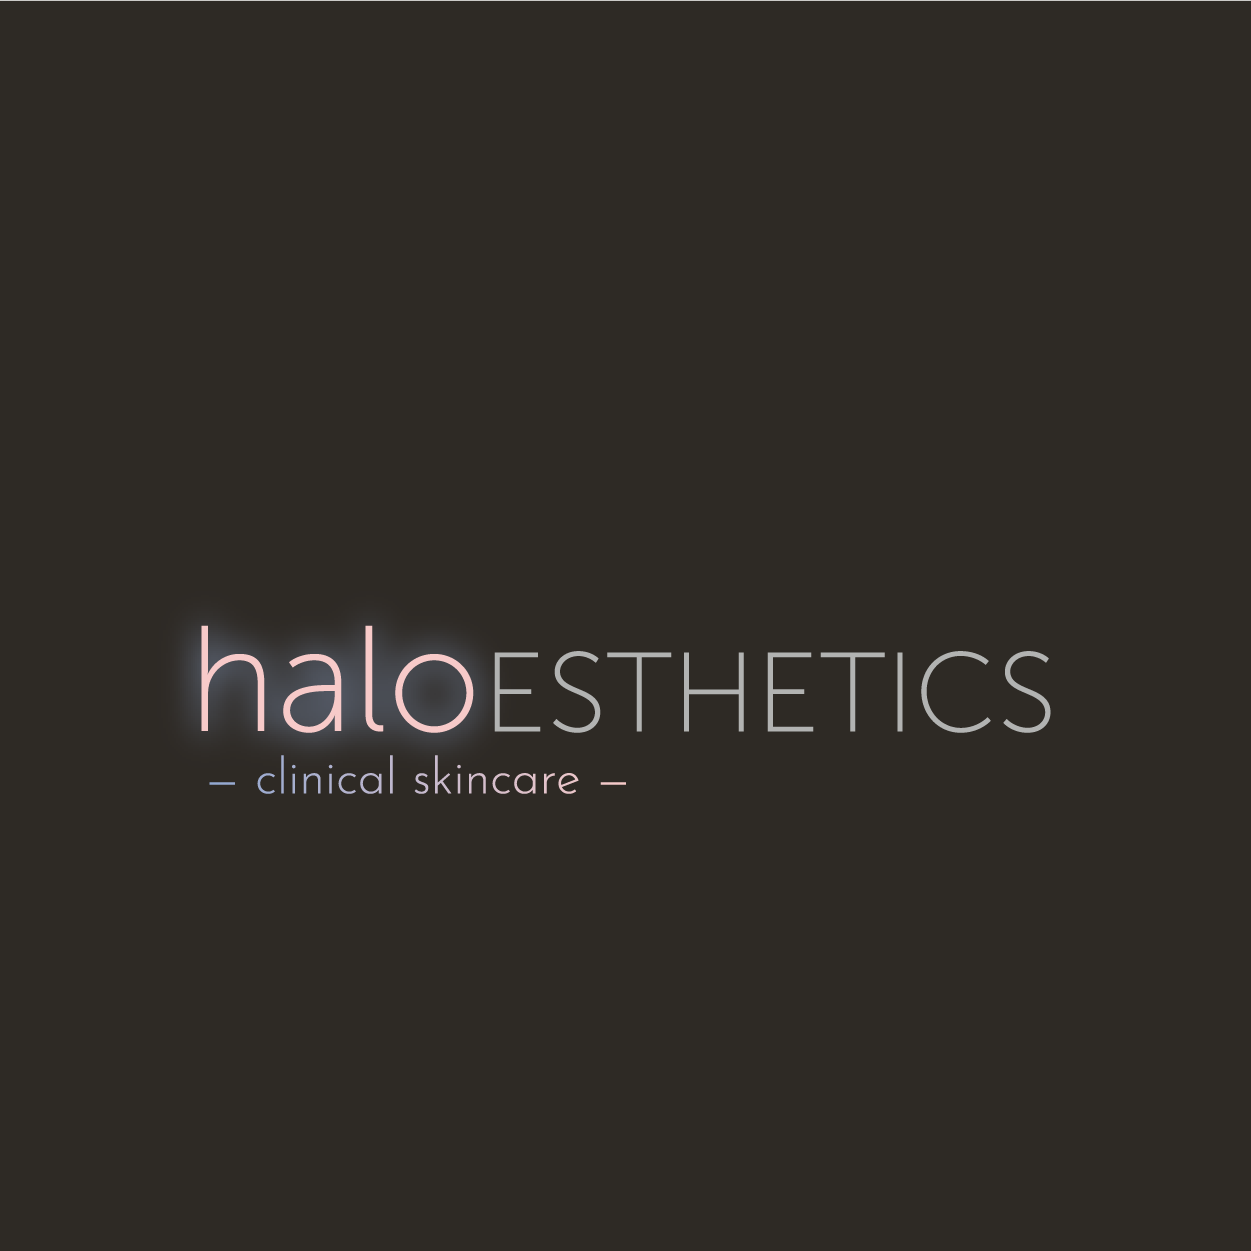 Halo Esthetics Portfolio Cover Photo Squarespace-01.png